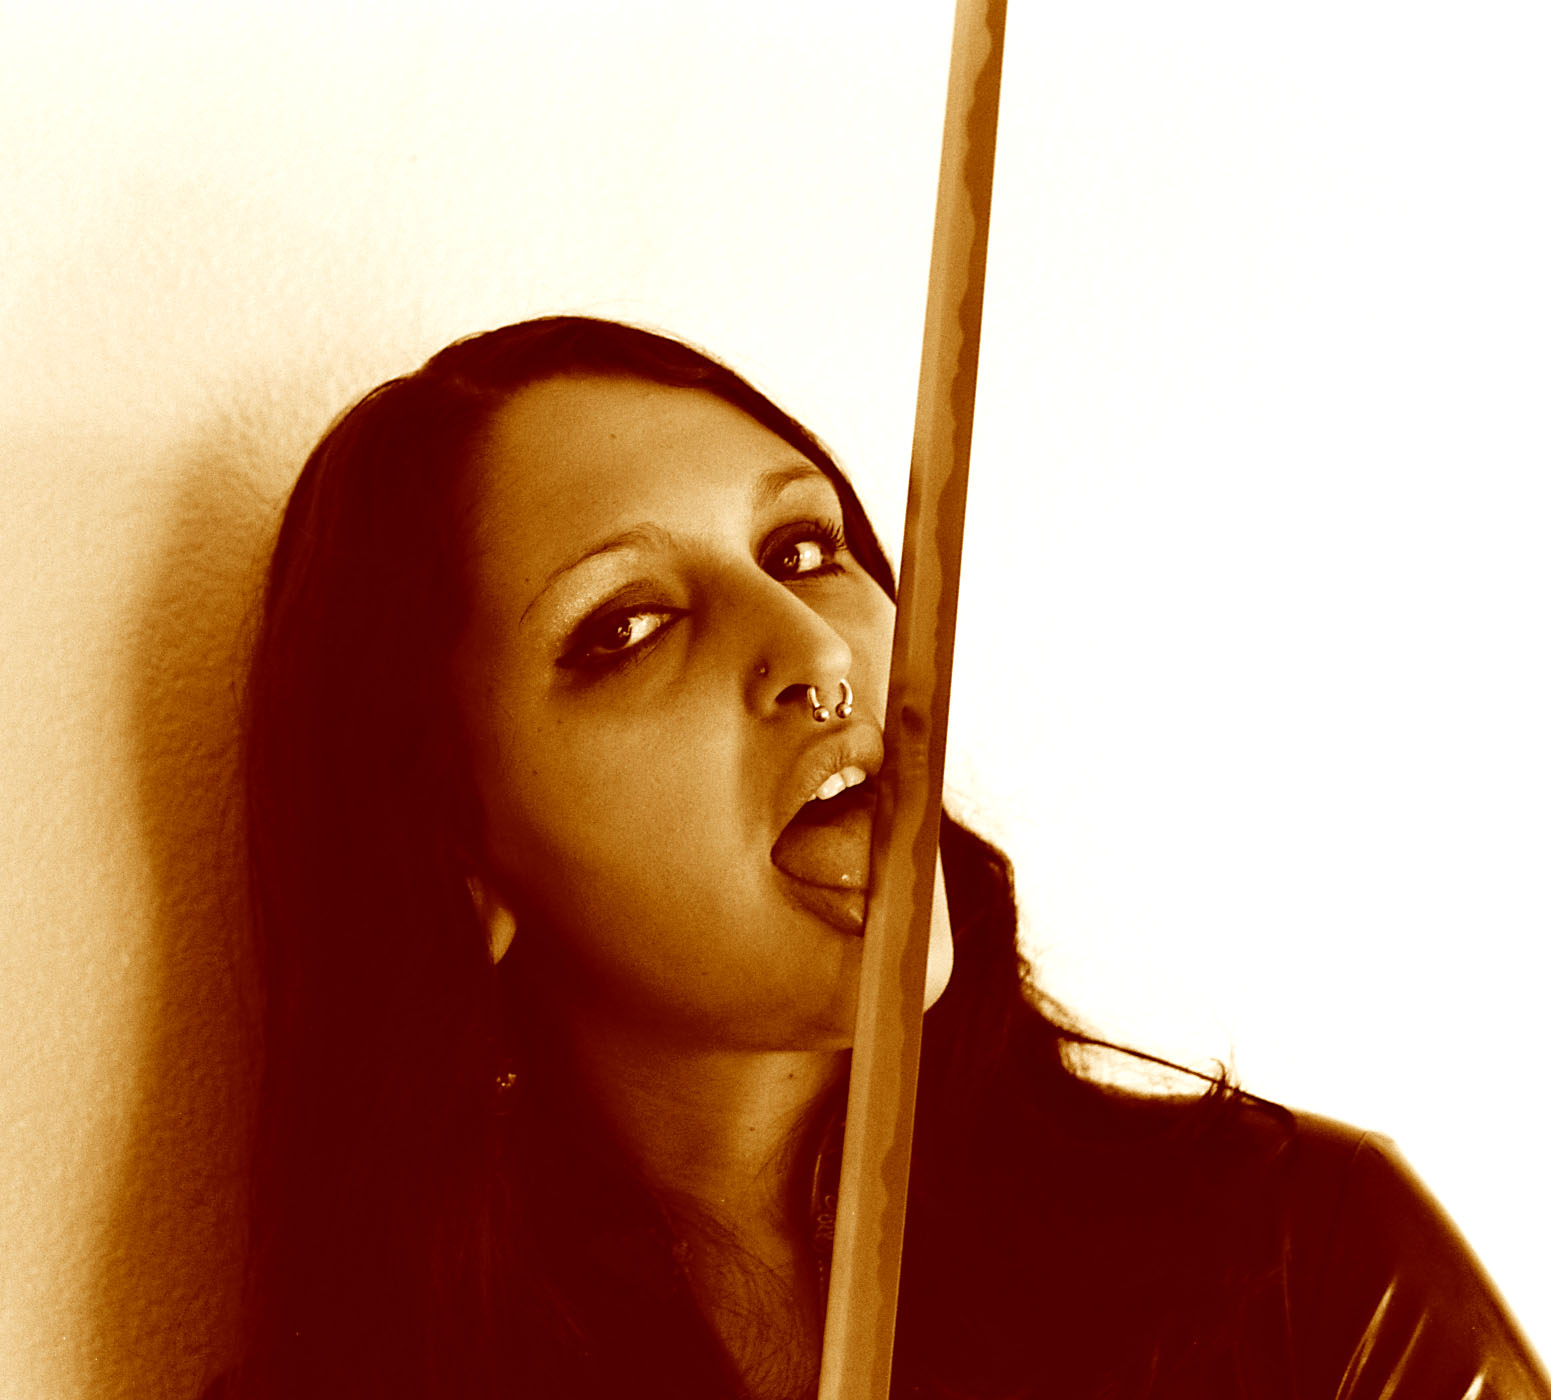 Sahar- "Sword lick"